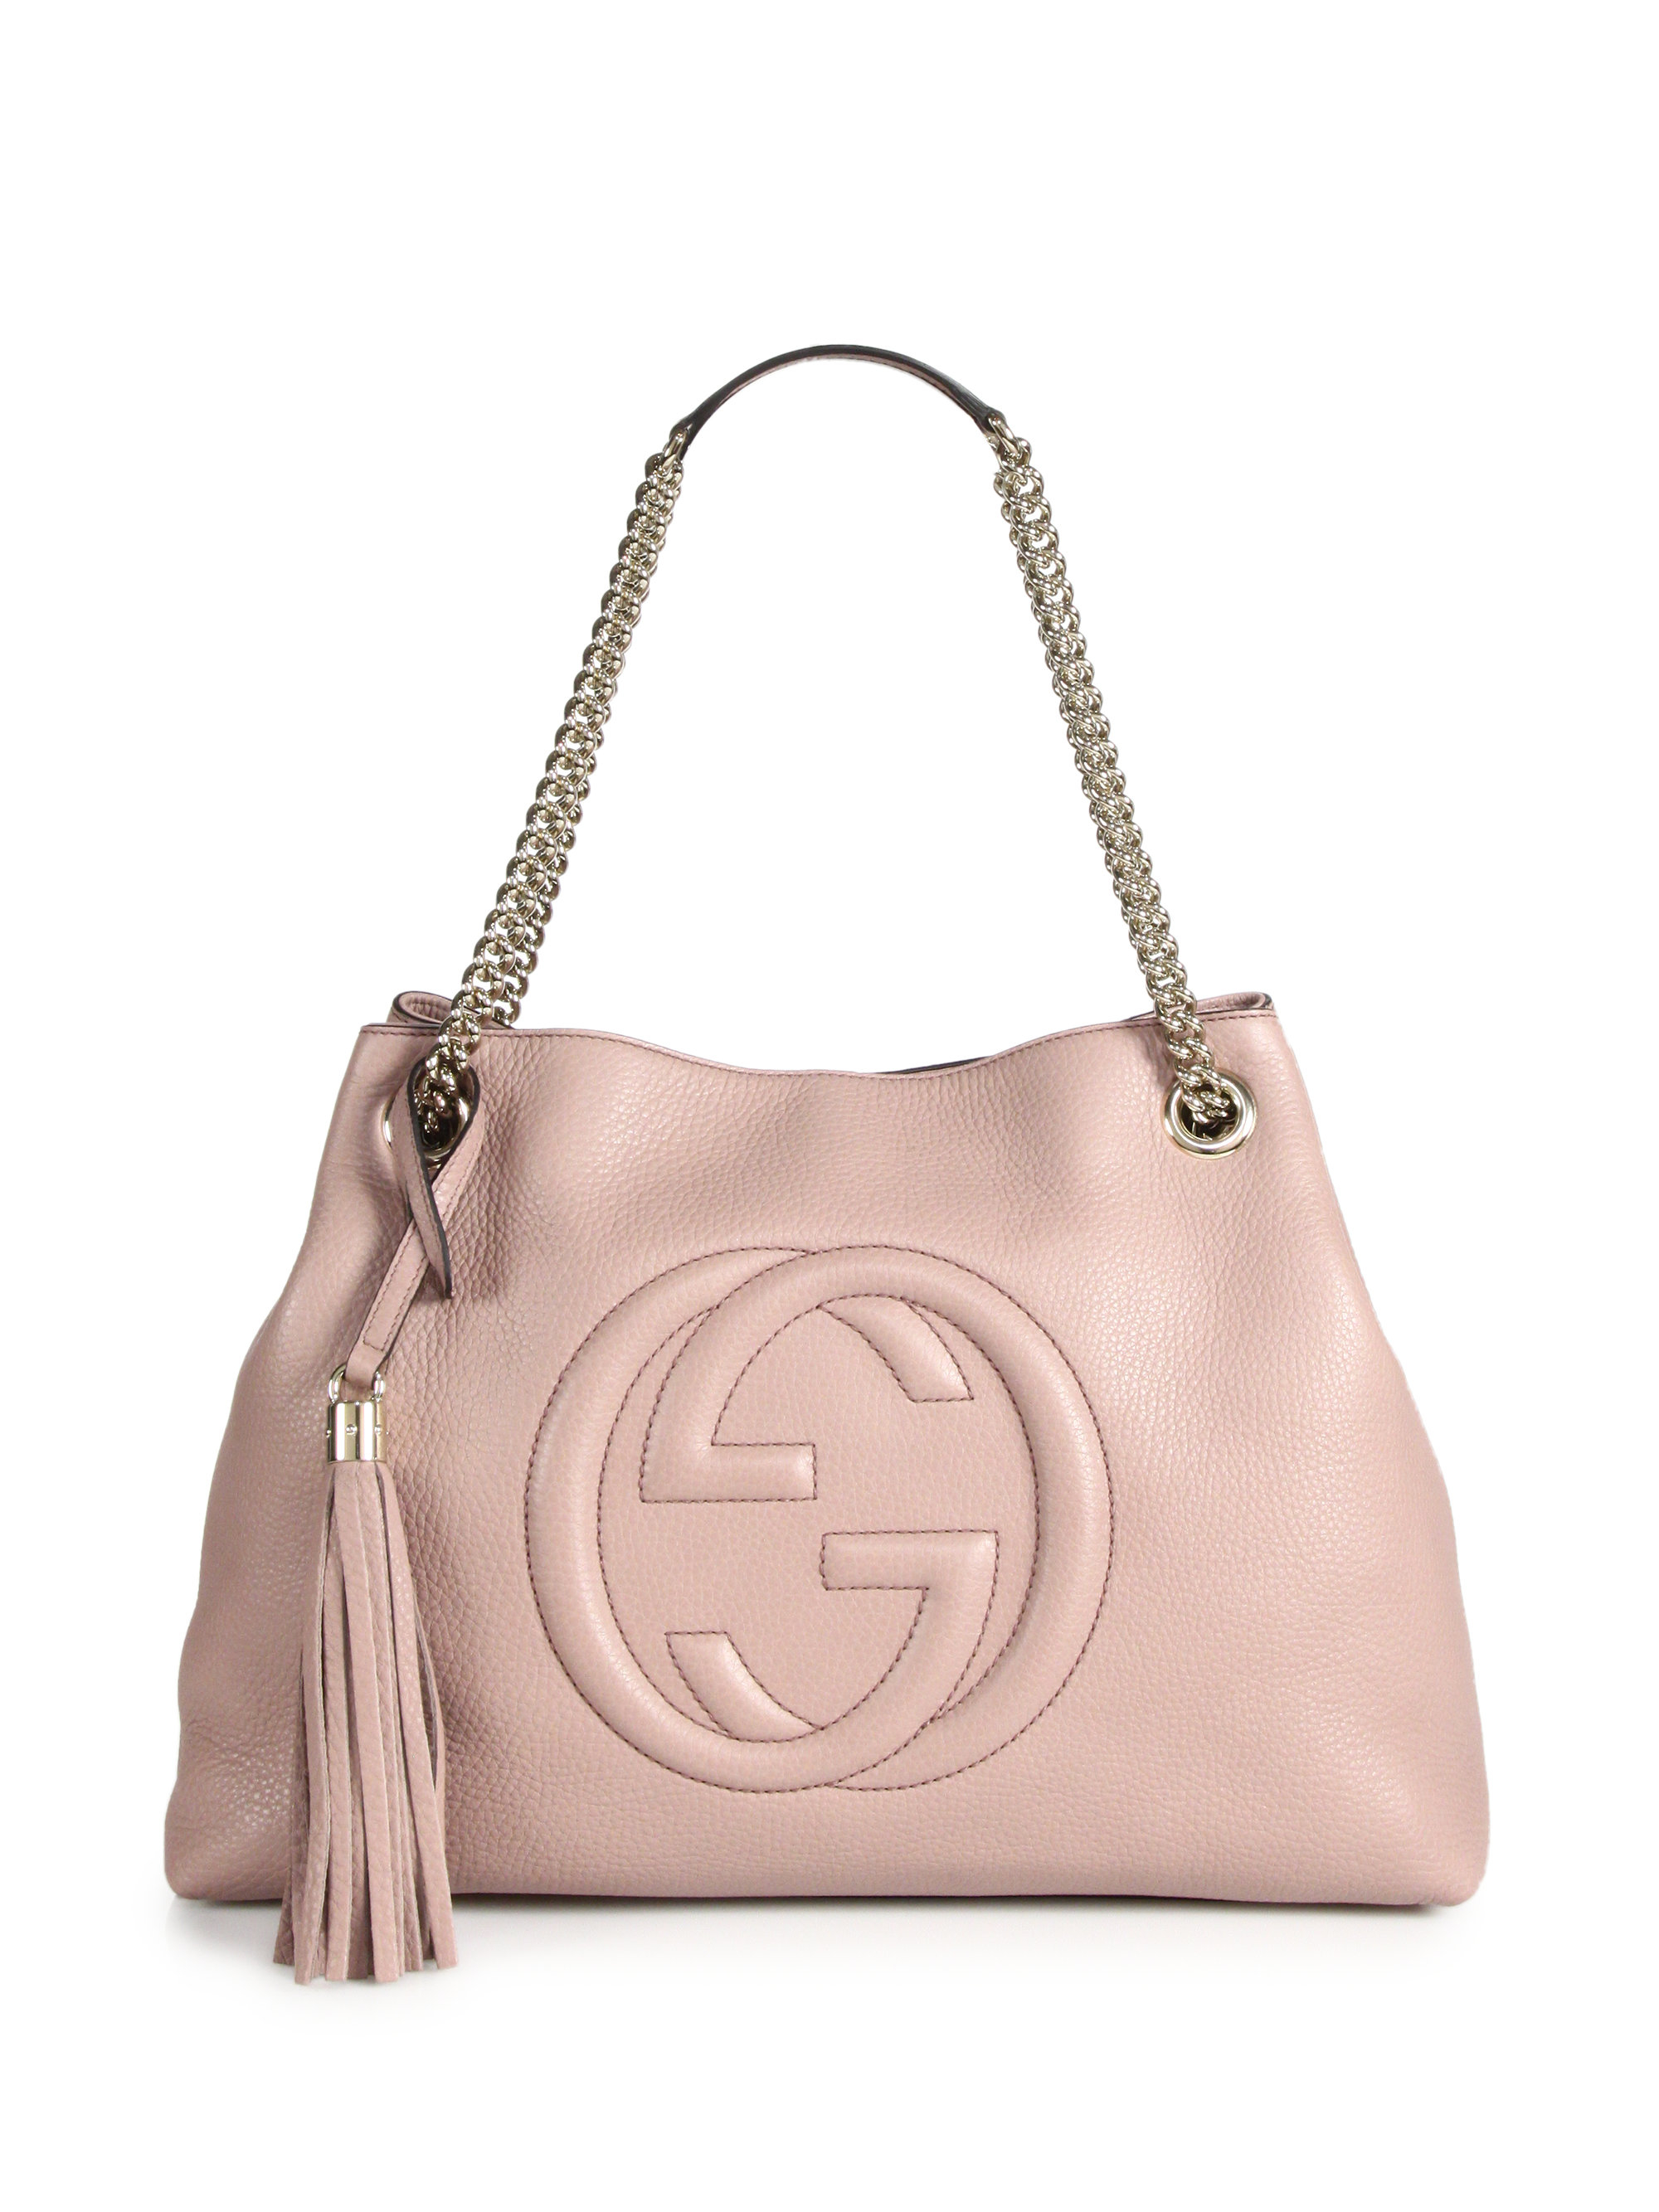 Gucci Soho Medium Leather Shoulder Bag in Pink | Lyst